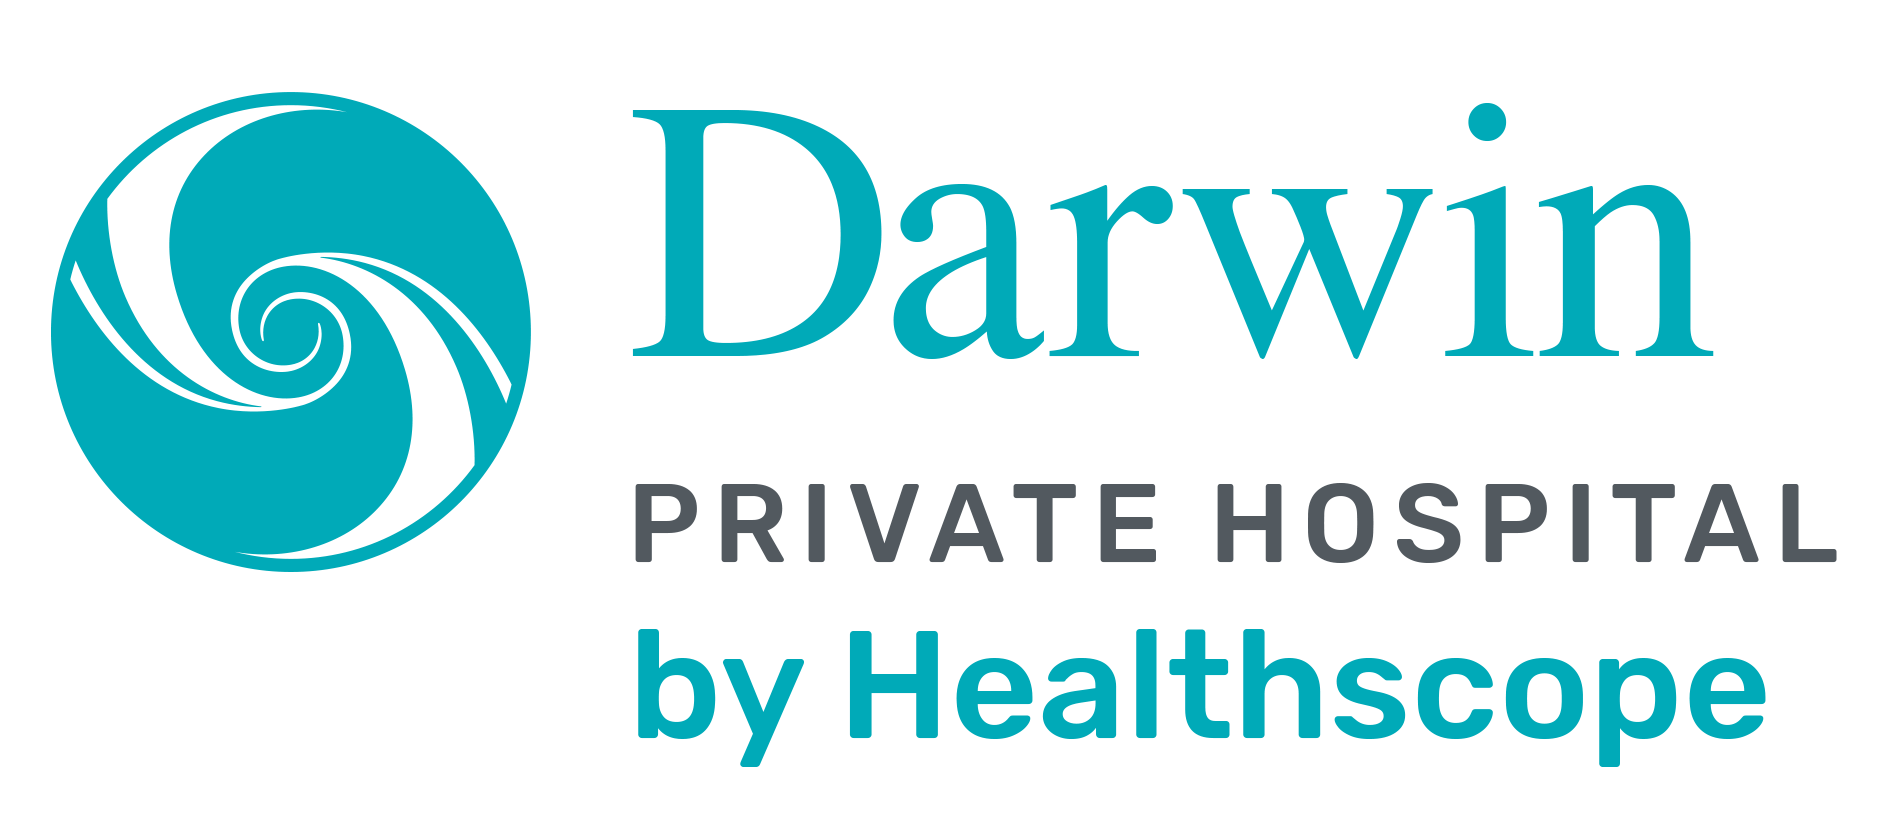 Darwin Private Hospital